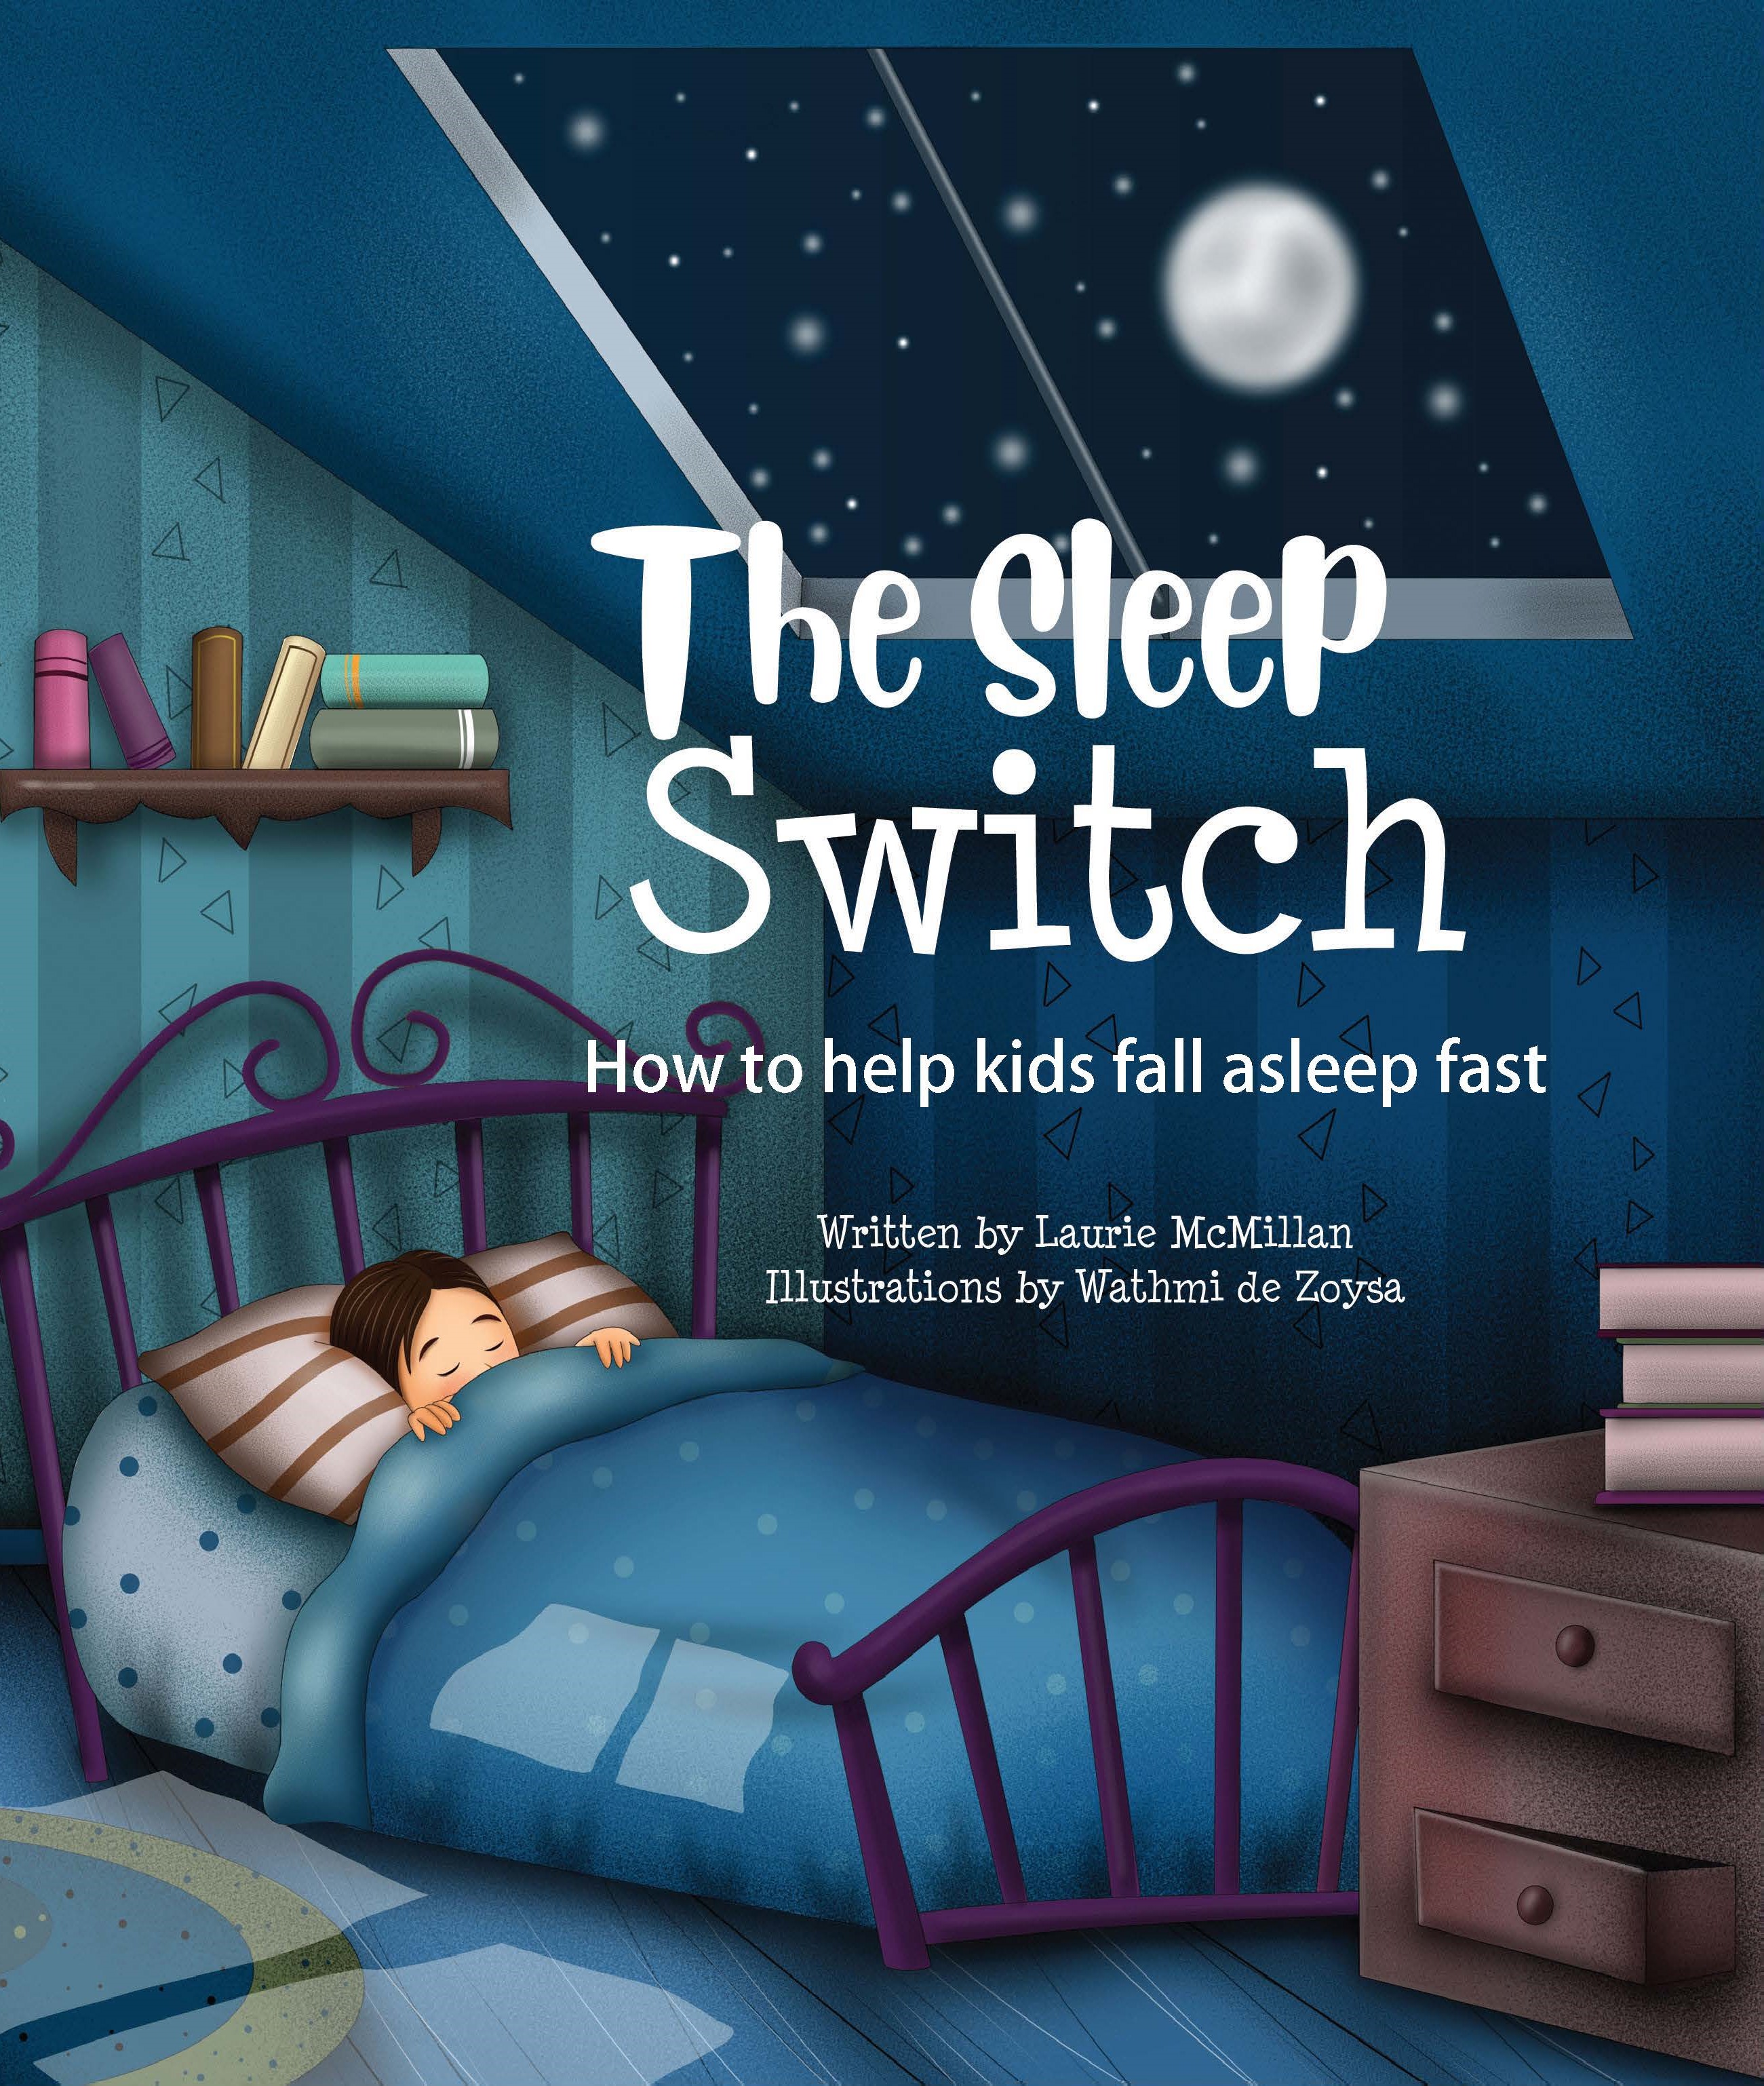 The Sleep Switch LitPick Book Reviews